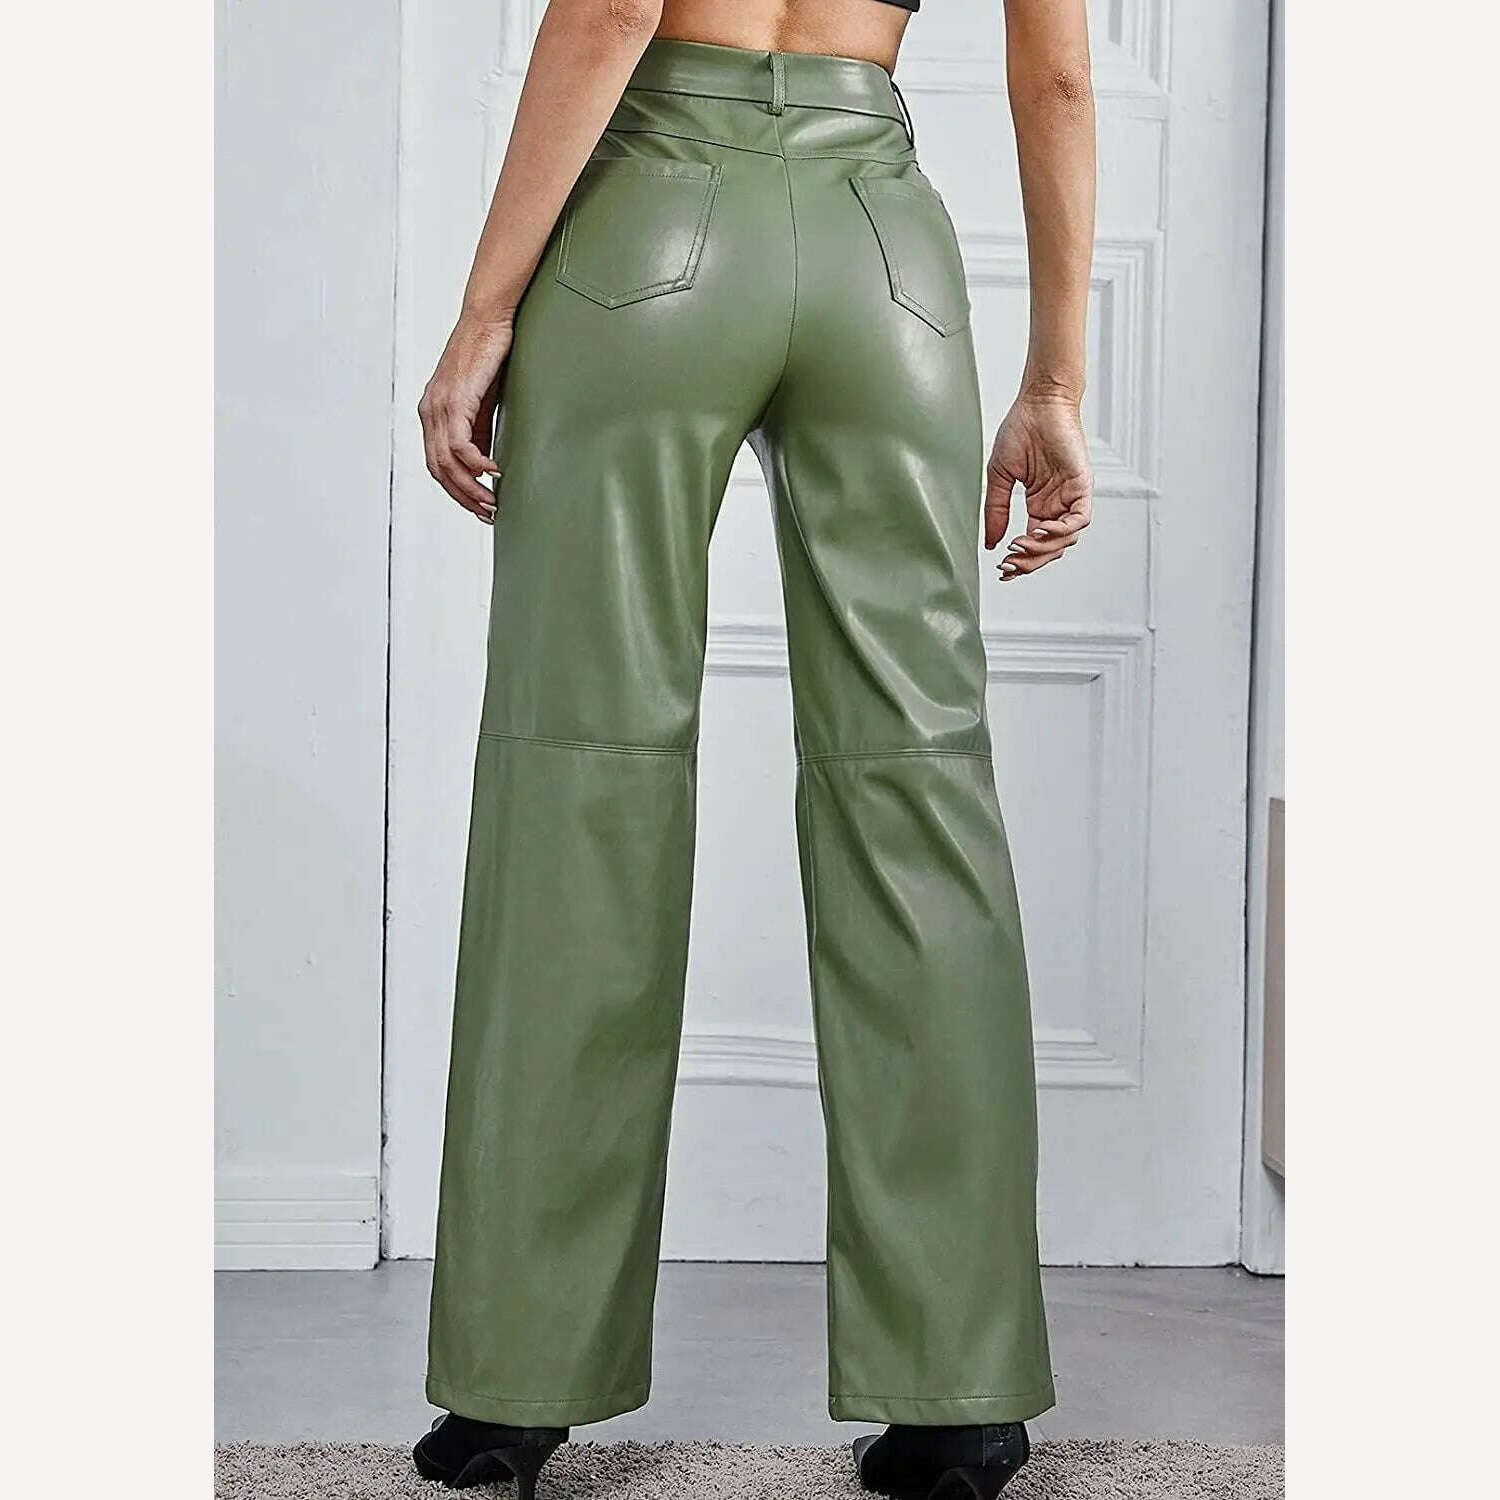 KIMLUD, PU Leather Pants High Waist Pockets Women&#39;s Green Black Wide Leg Pants 2021 Autumn Winter Fashion New TrousersBlusas Loose Shirt, KIMLUD Womens Clothes